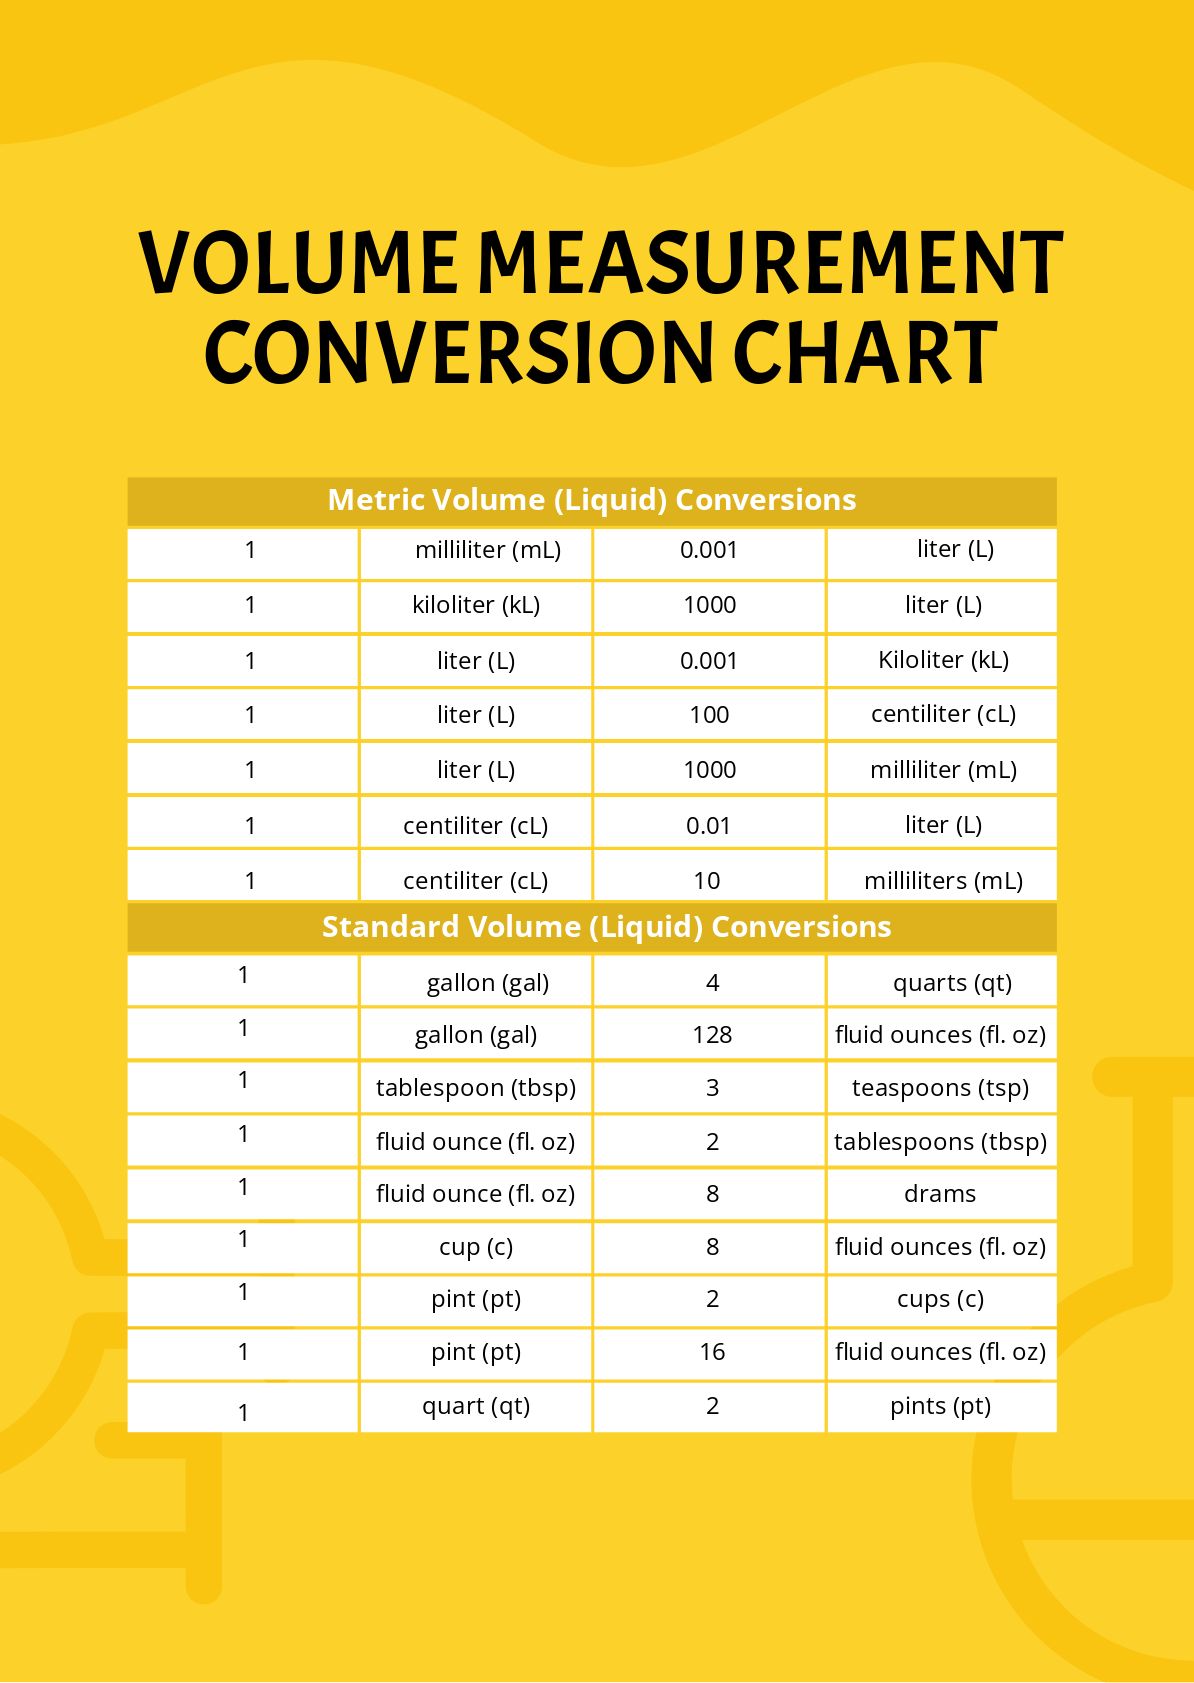 Volume Measurement Conversion Chart in PDF